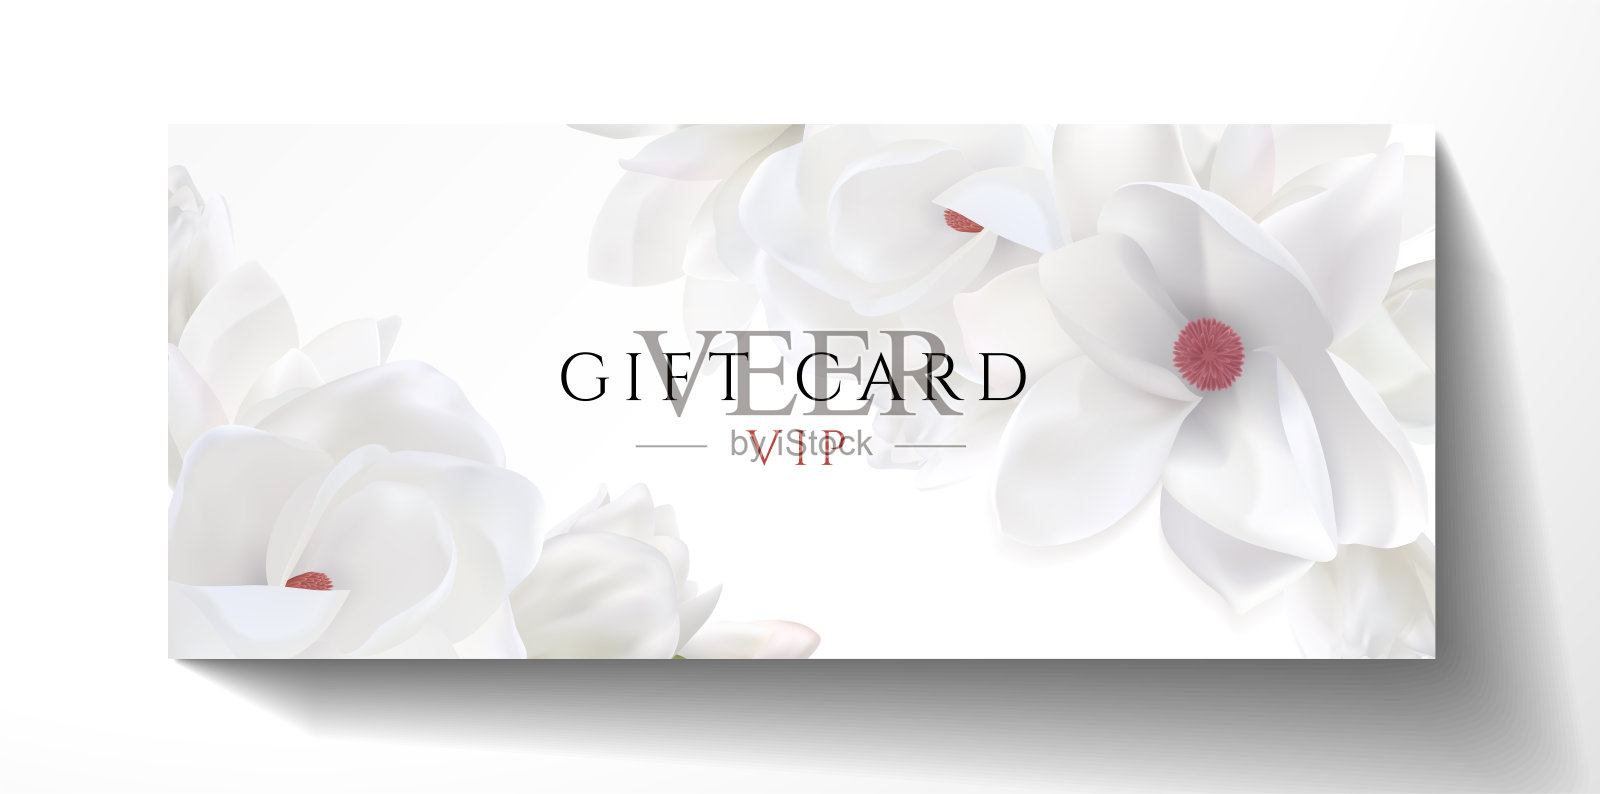 VIP邀请礼品卡设计。白色背景与木兰花插画图片素材